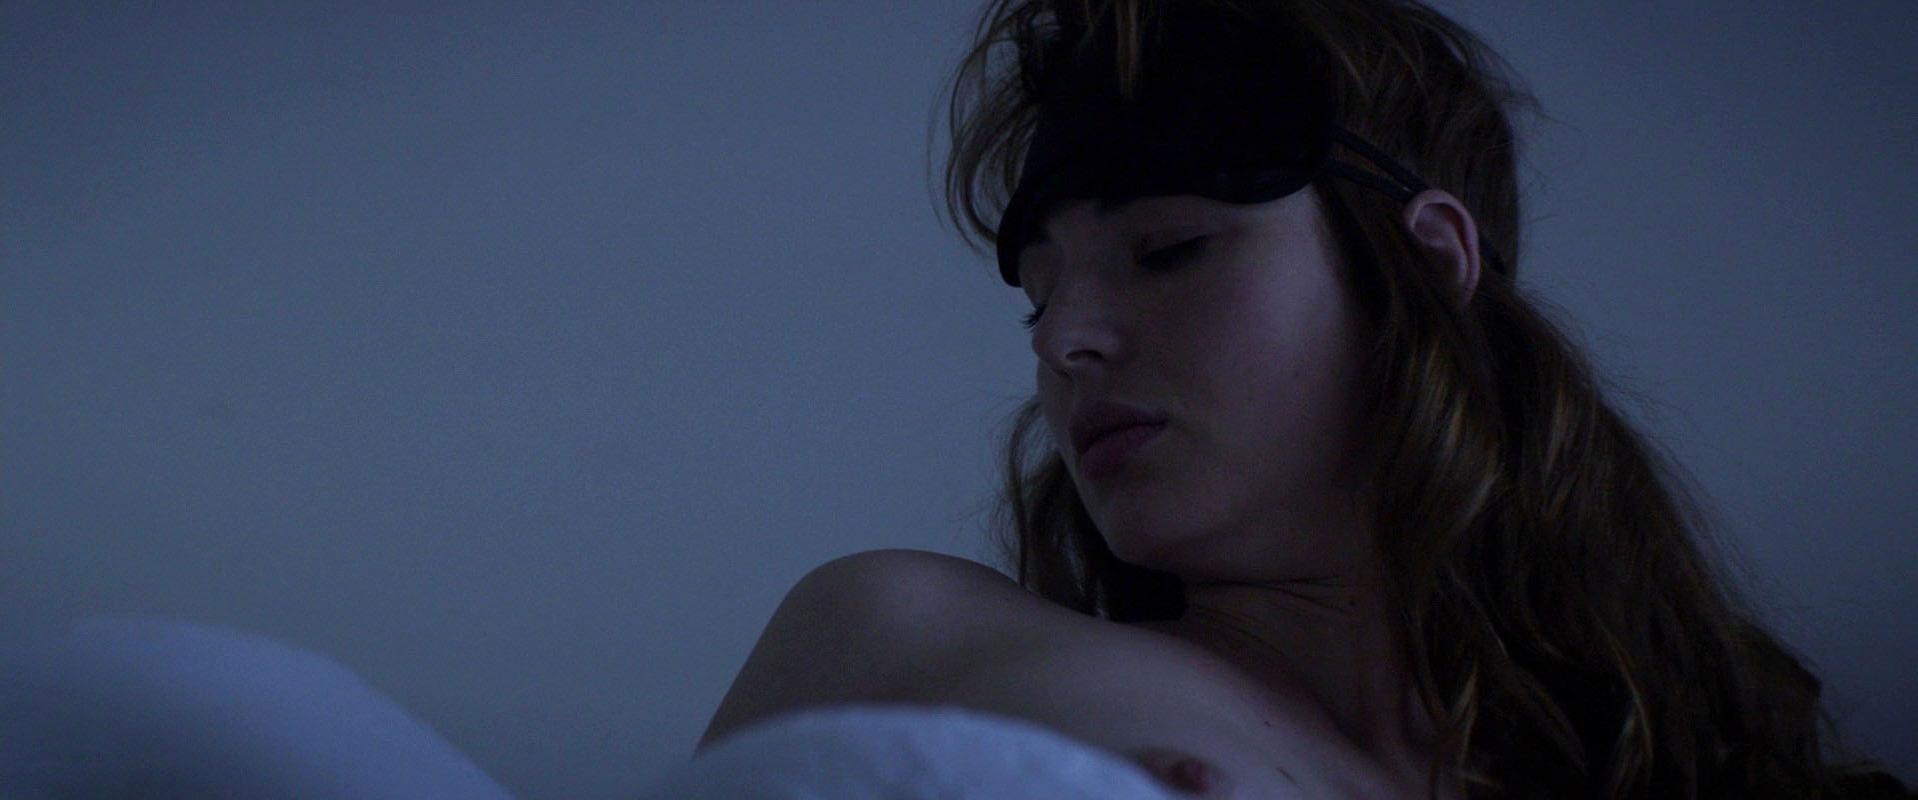 Louise Bourgoin nude - Mojave (2015)